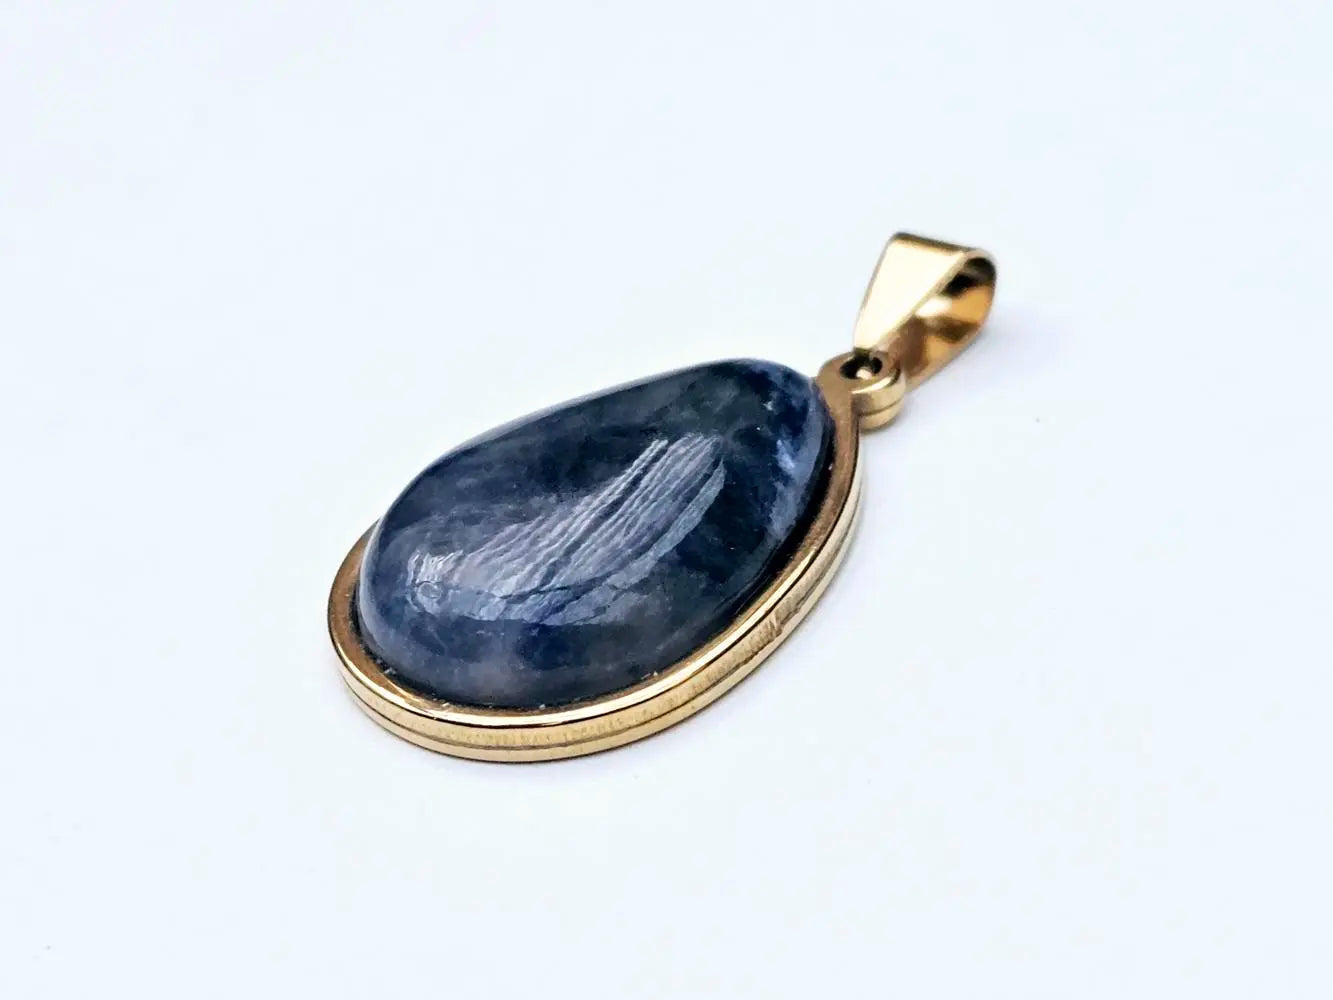 Sodalite Gemstone Teardrop Pendant with Gold Plating - Dainty Necklace for Everyday Wear Scandinavian Gem Design